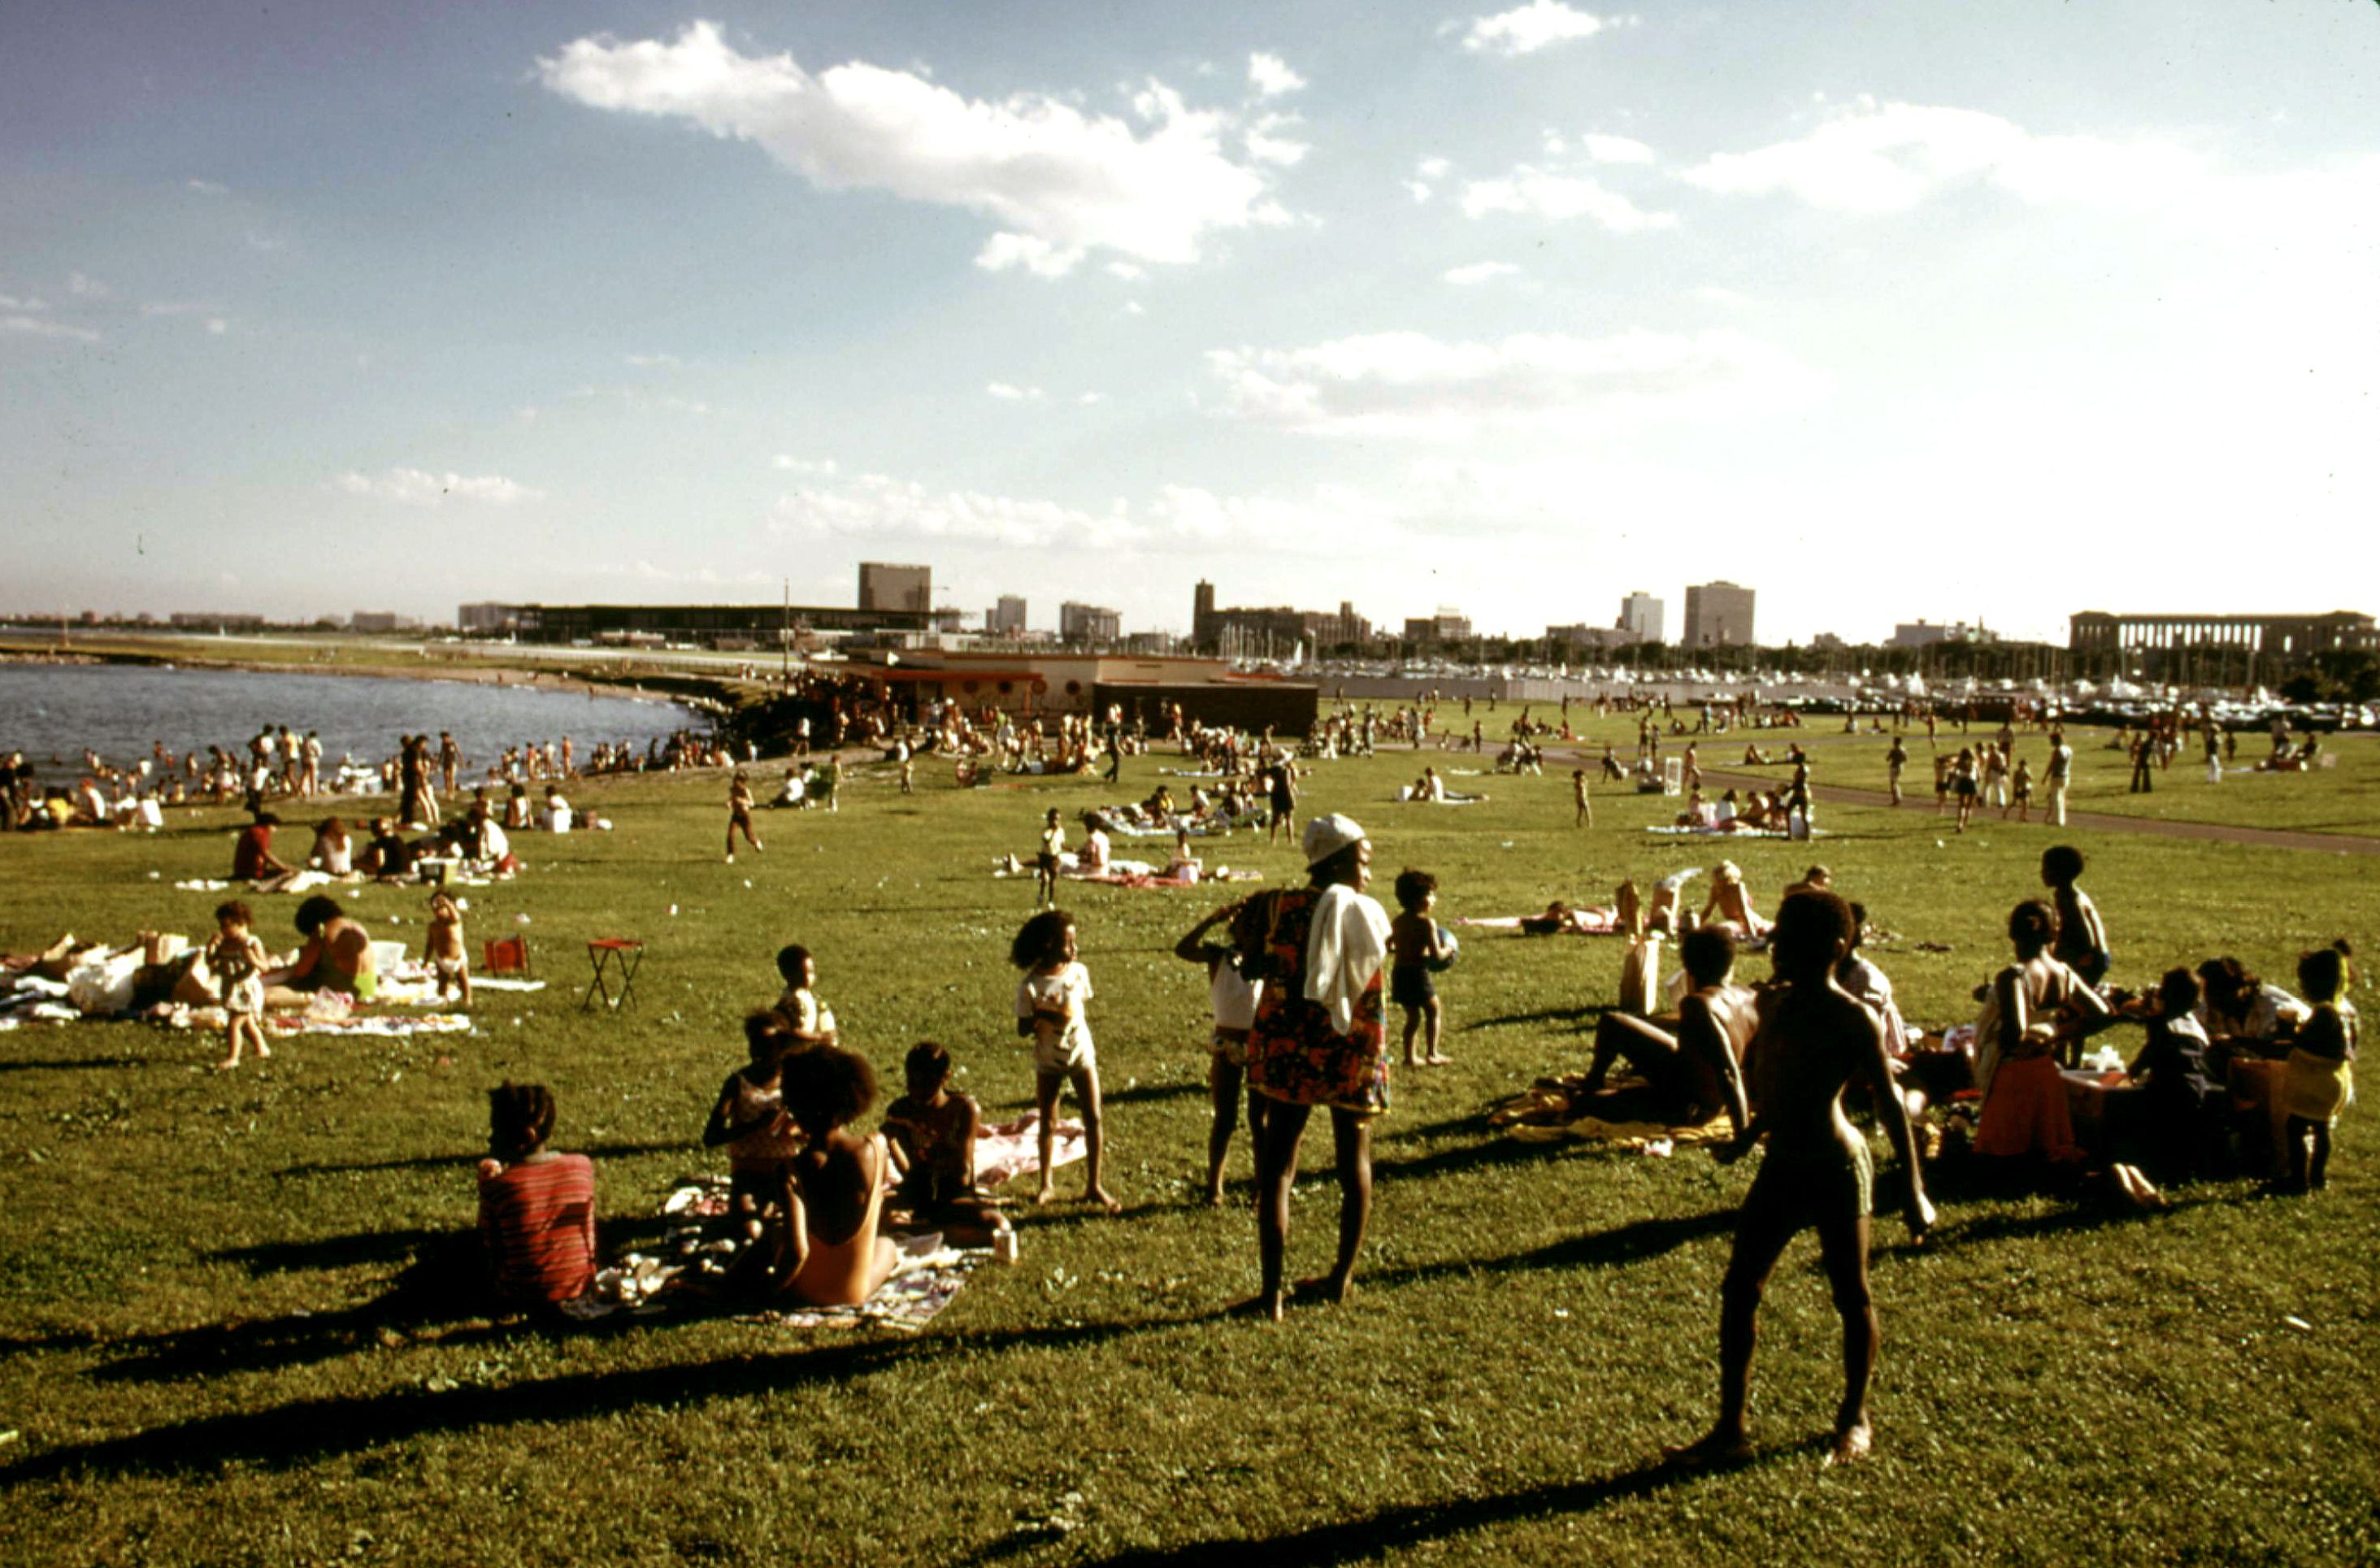 People on beach grass